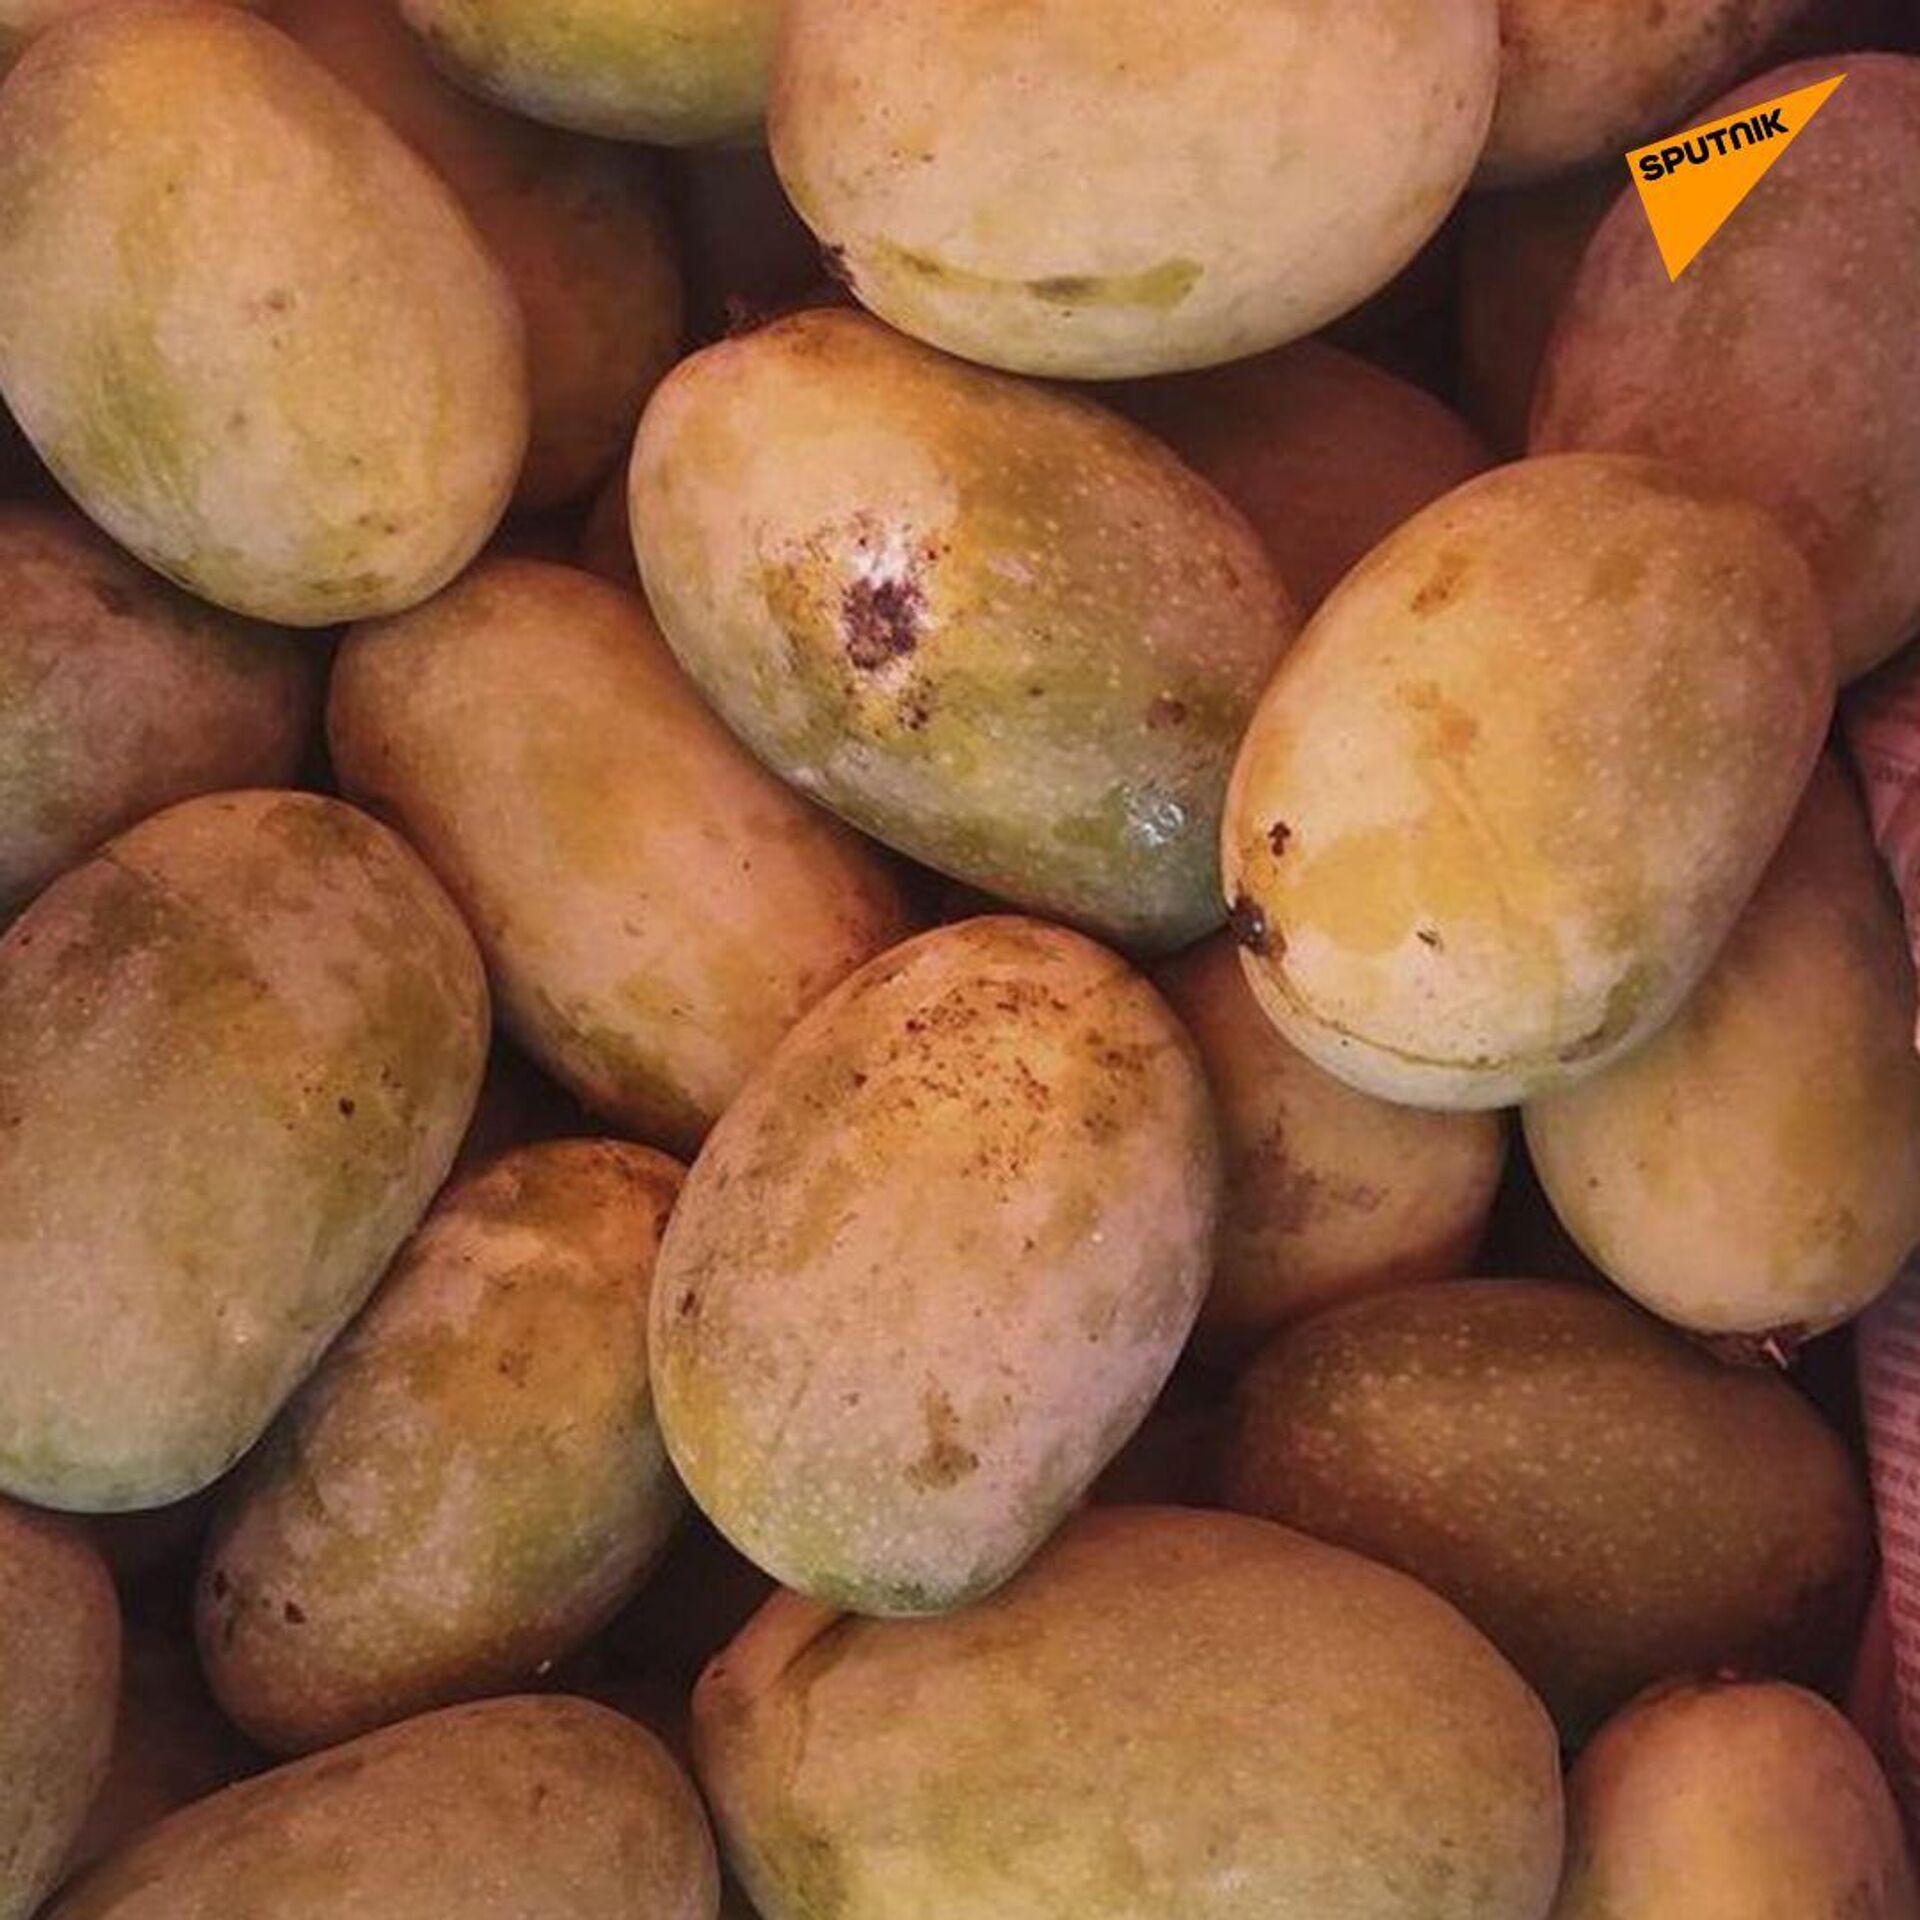 Sankalp Singh Parihar, a plantation owner from Jabalpur in Madhya Pradesh state, plants Miyazaki mangoes from Japan that sell for Rs 2.7 lakh (approx. $2,300) per kilo in the international market.  - Sputnik भारत, 1920, 19.05.2023